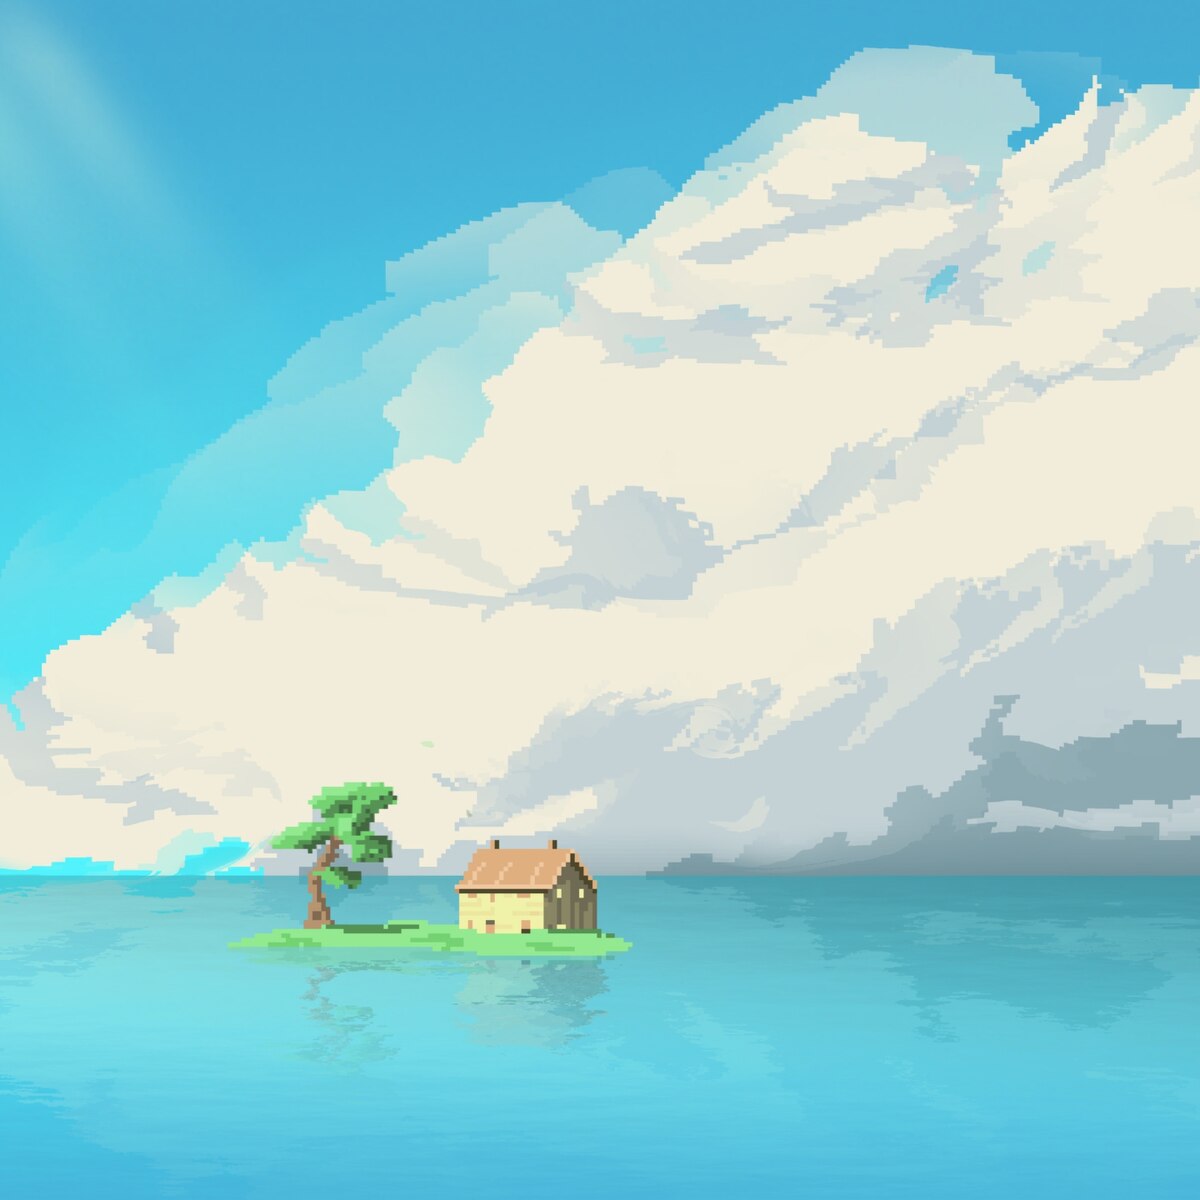 Pixel Island